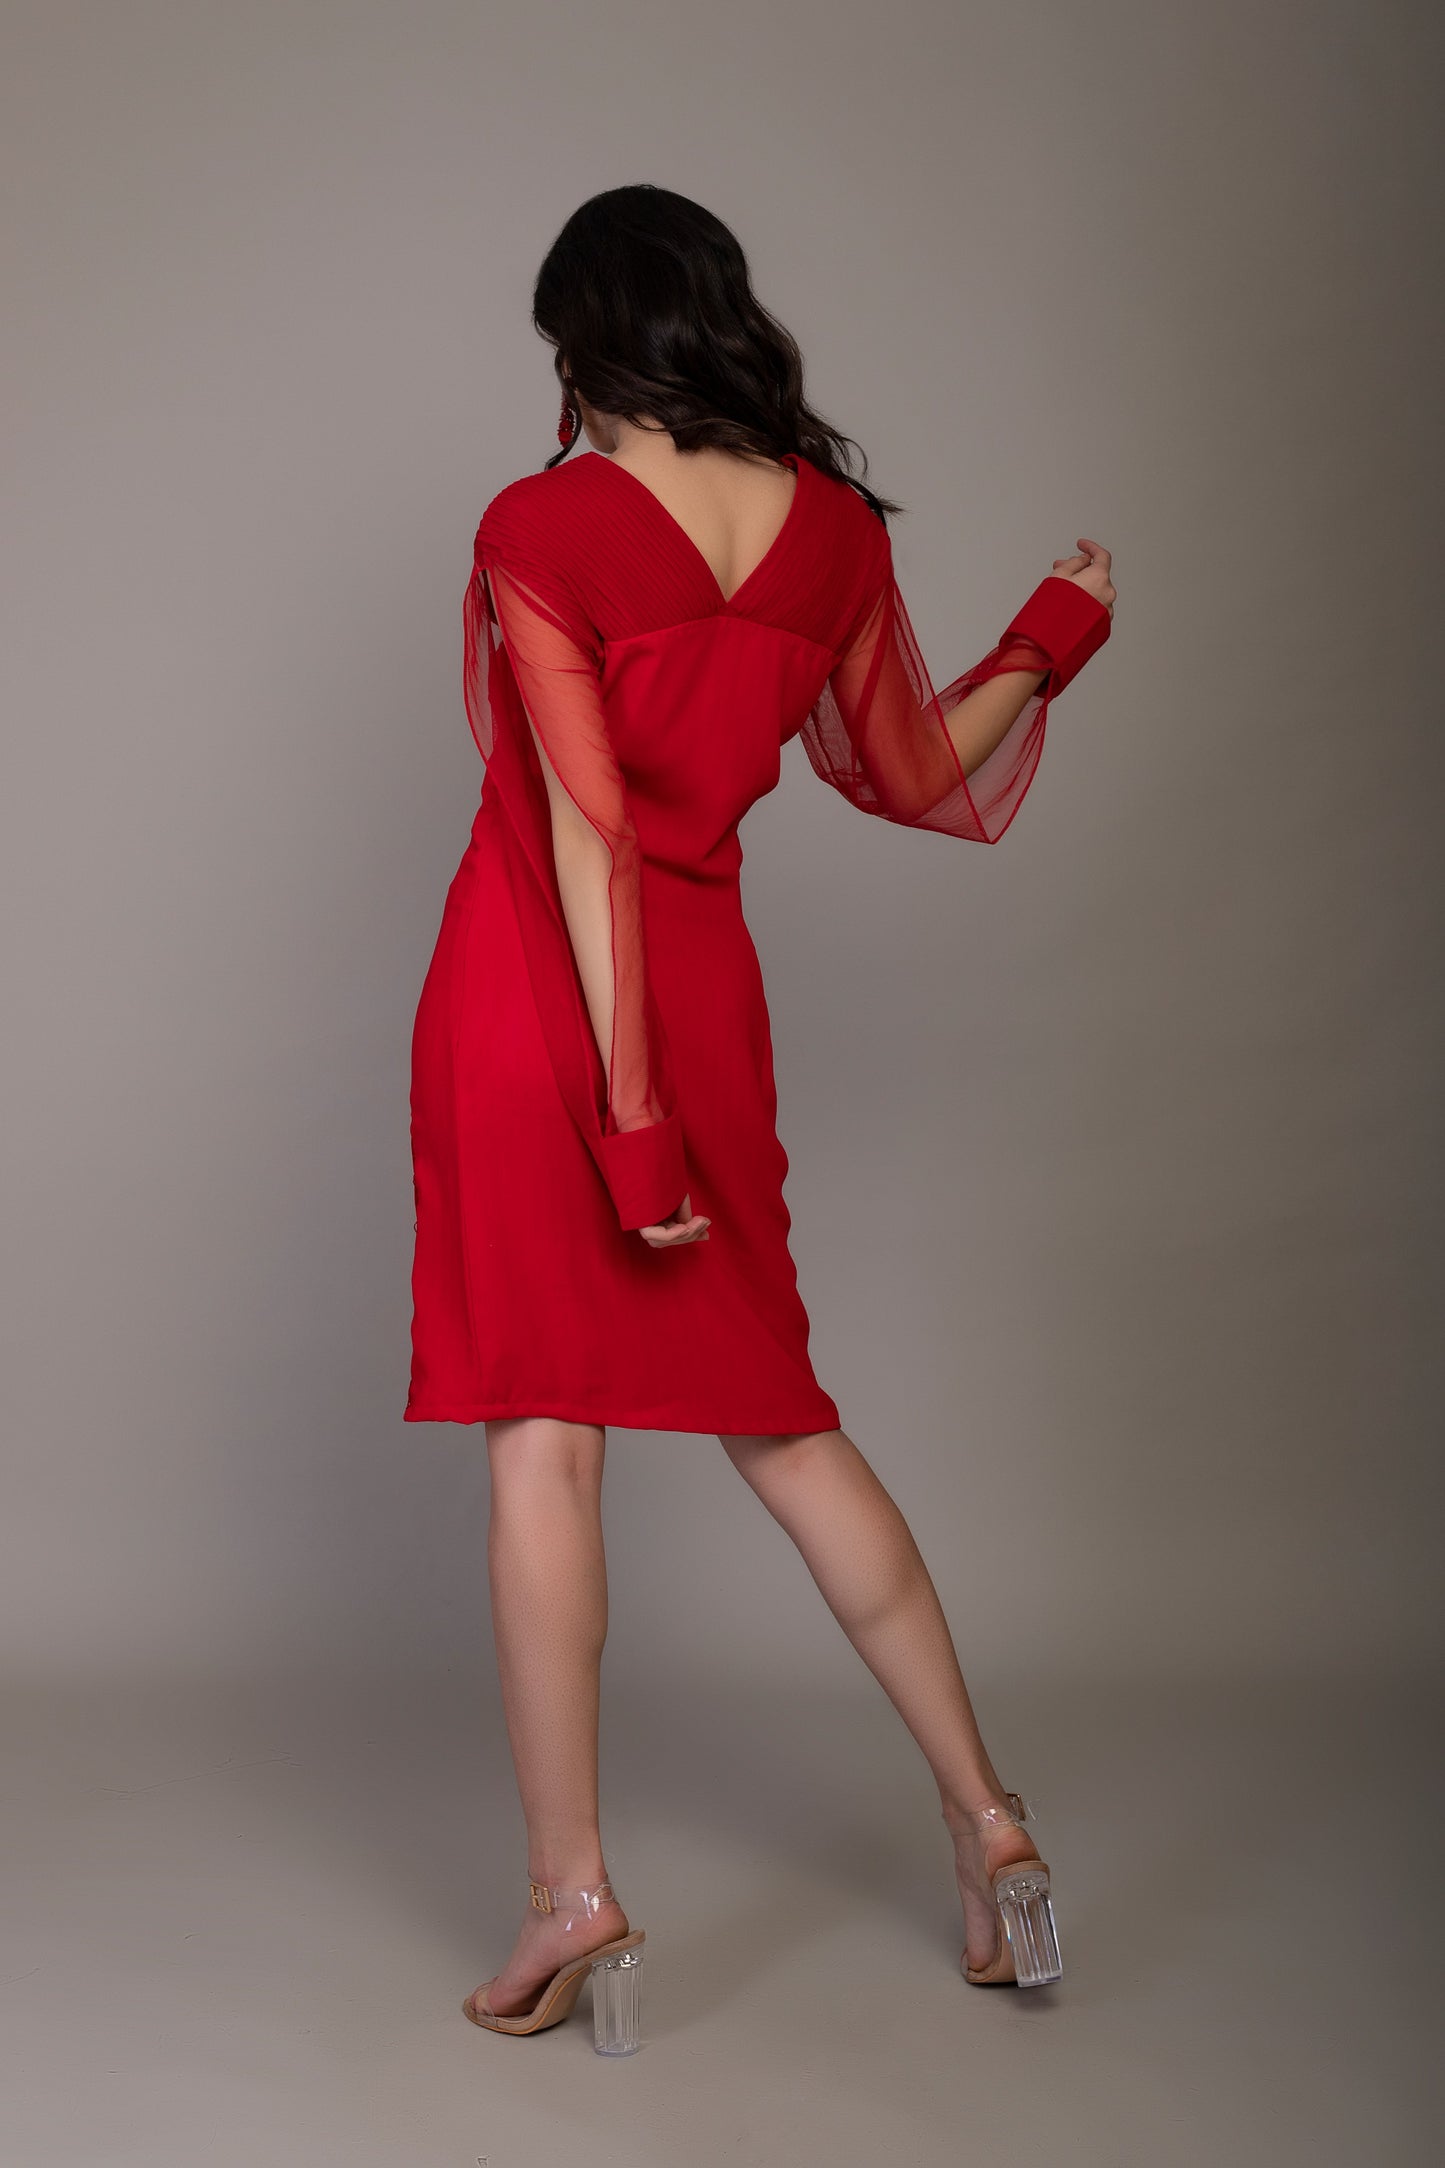 red short dress